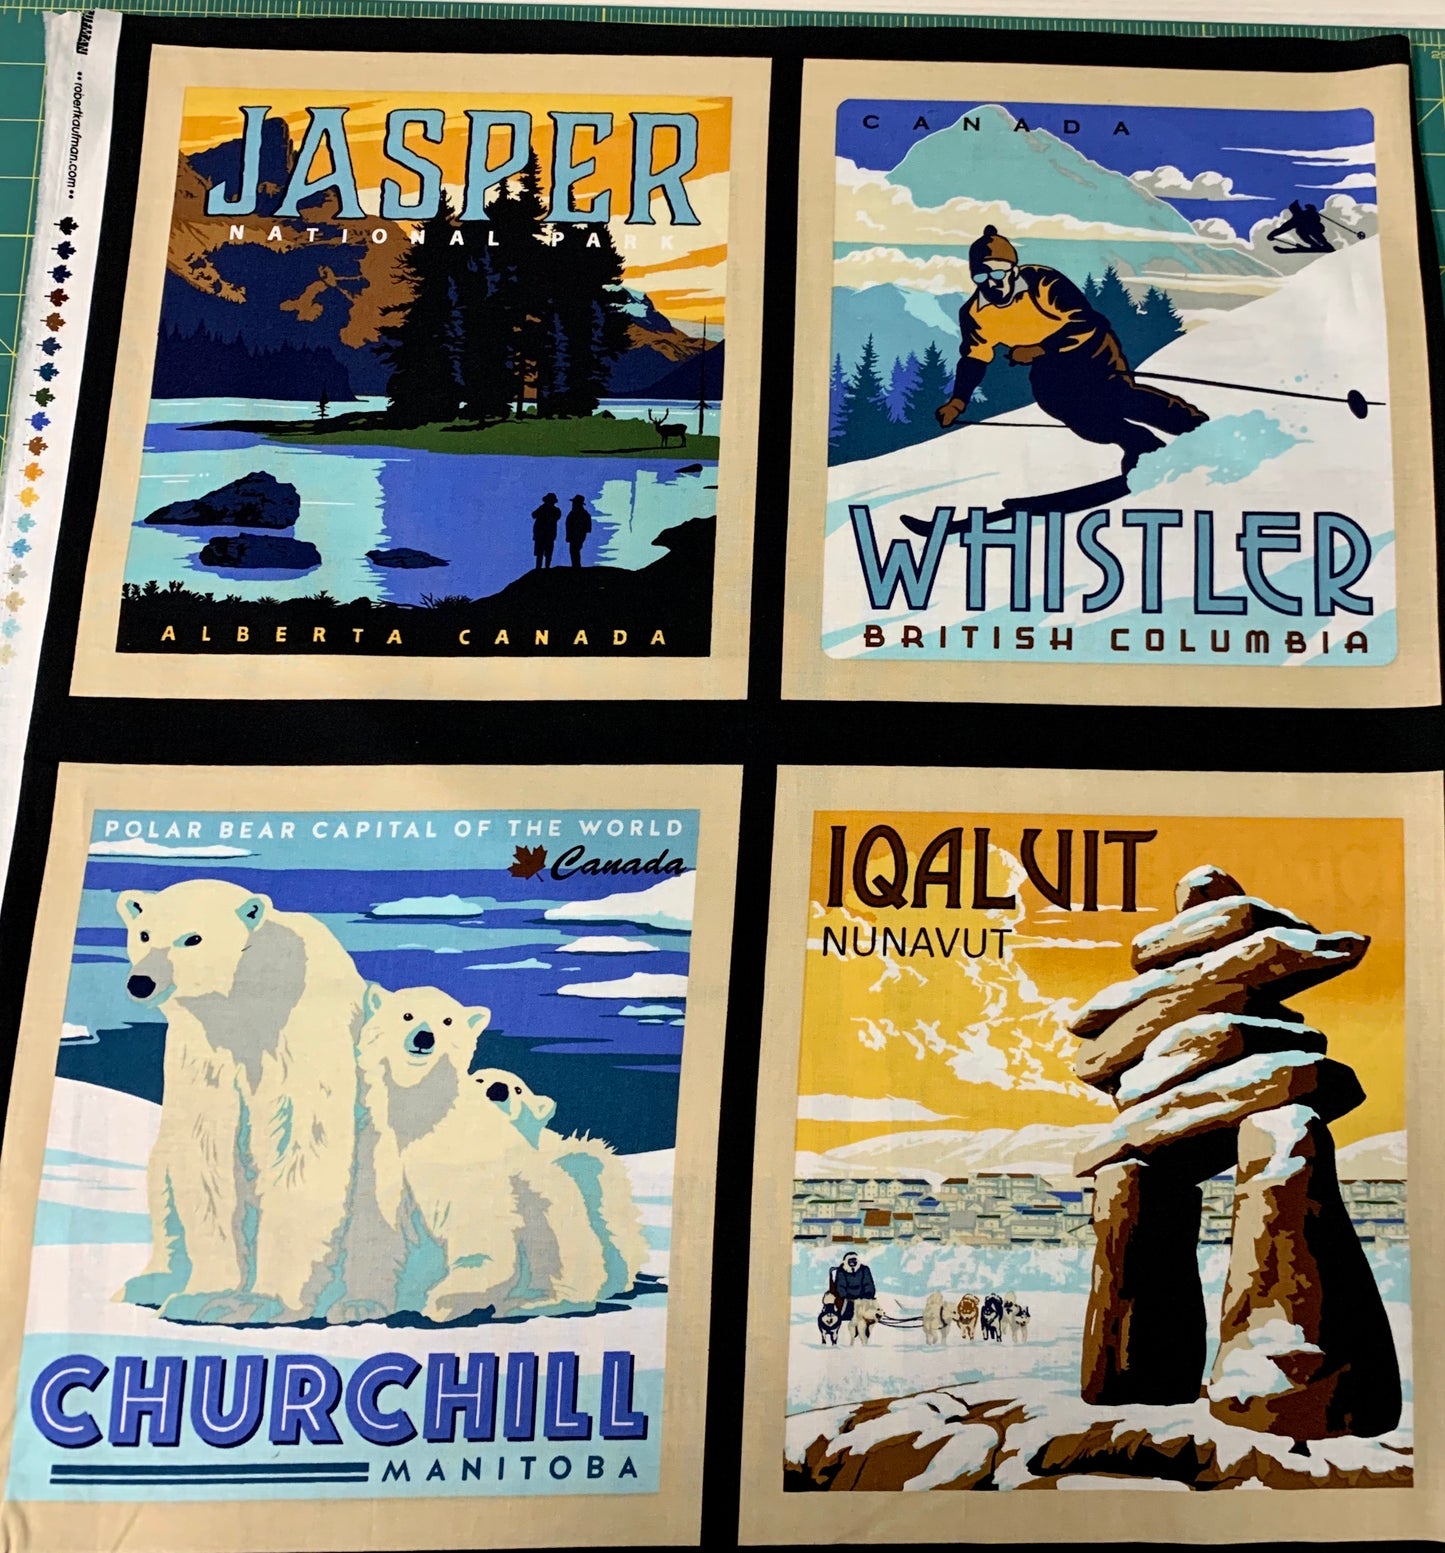 Discover Canada 2 - Vintage City Postcards - Robert Kaufman